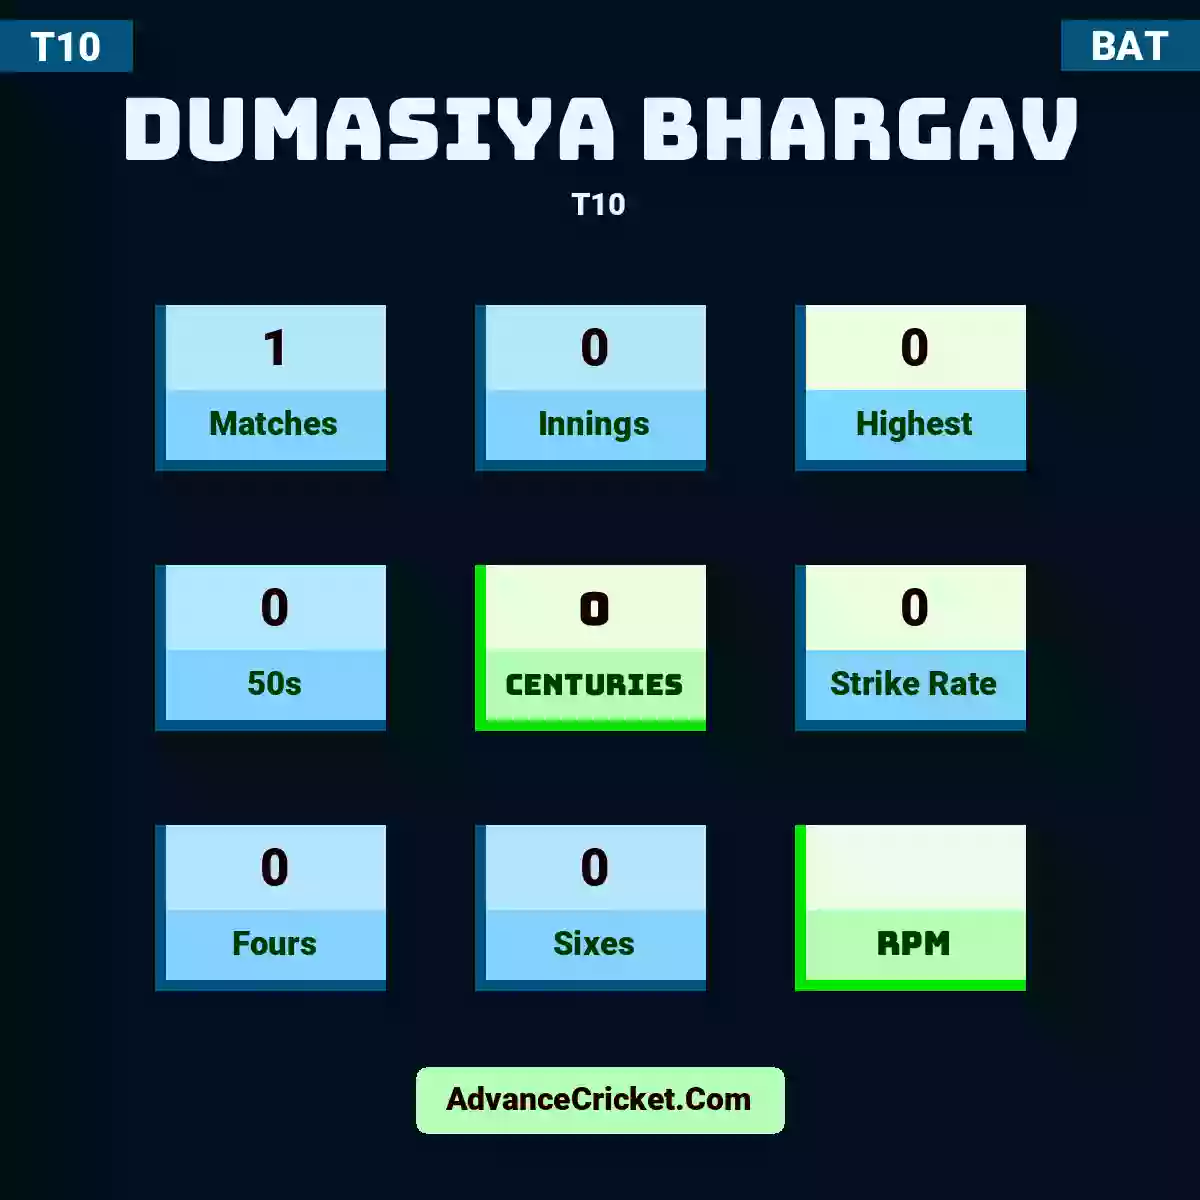 Dumasiya Bhargav T10 , Dumasiya Bhargav played 1 matches, scored 0 runs as highest, 0 half-centuries, and 0 centuries, with a strike rate of 0. D.Bhargav hit 0 fours and 0 sixes.